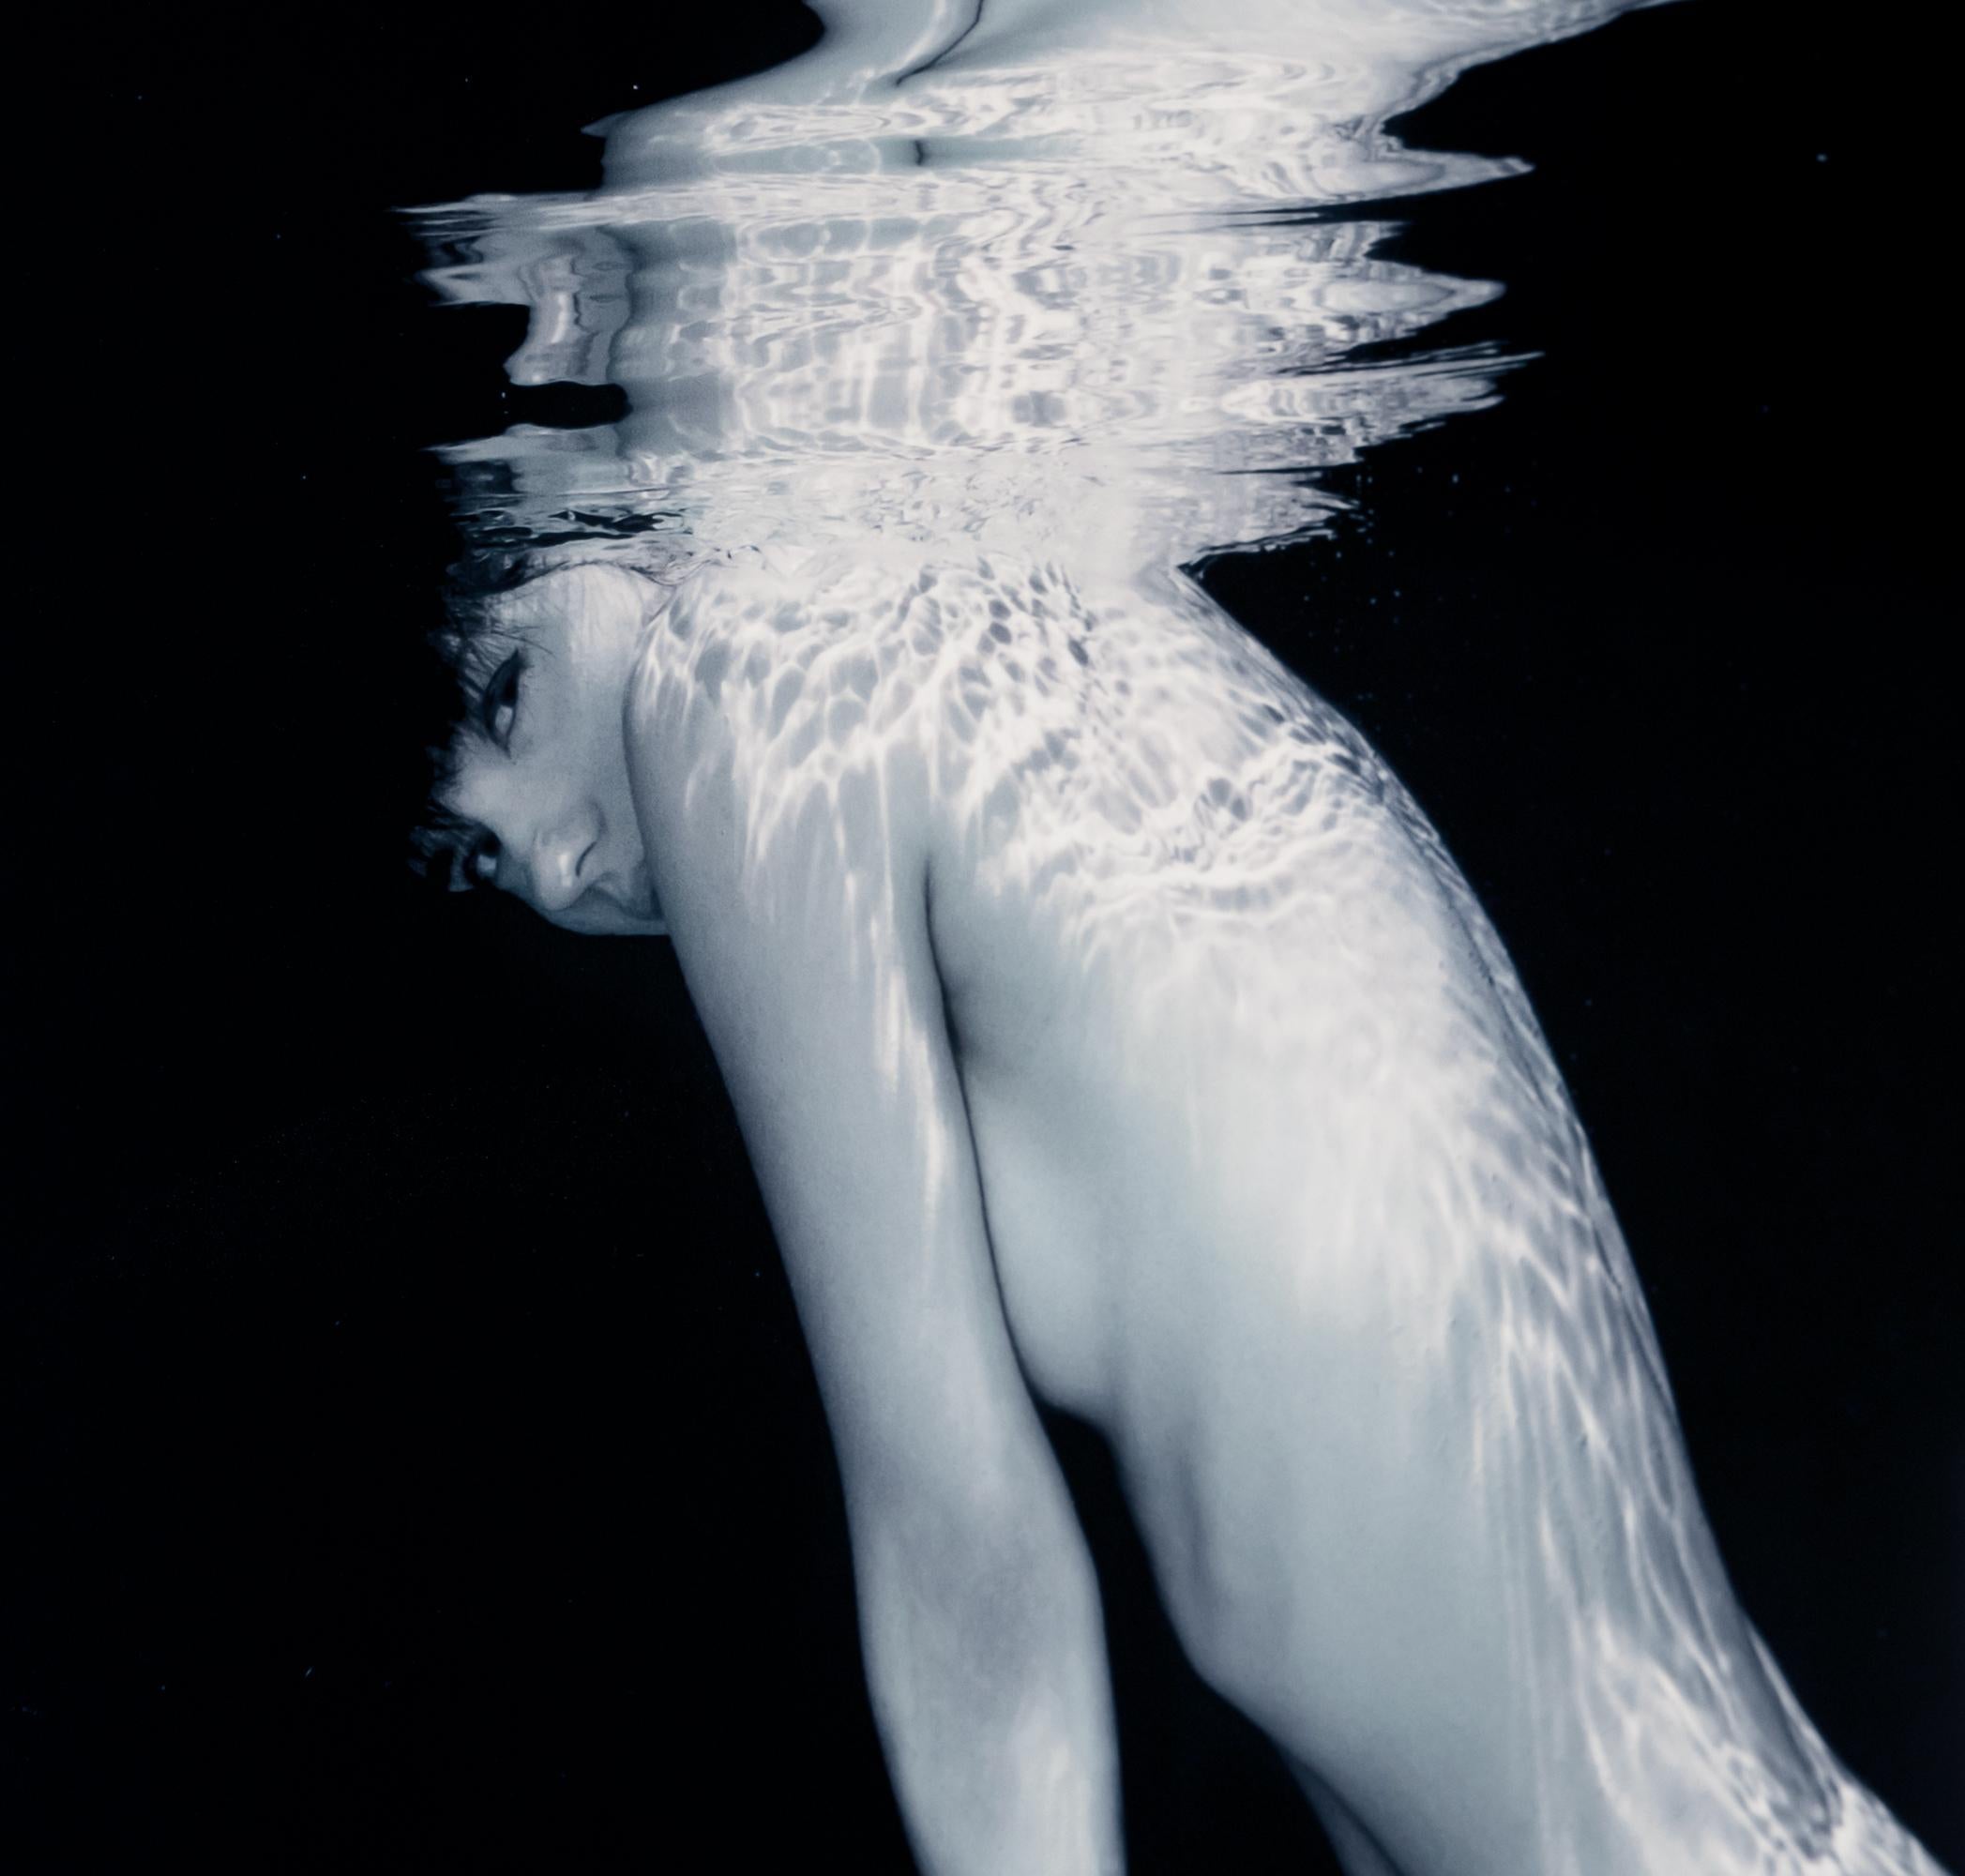 Carmen - underwater nude photograph - print on aluminum 40